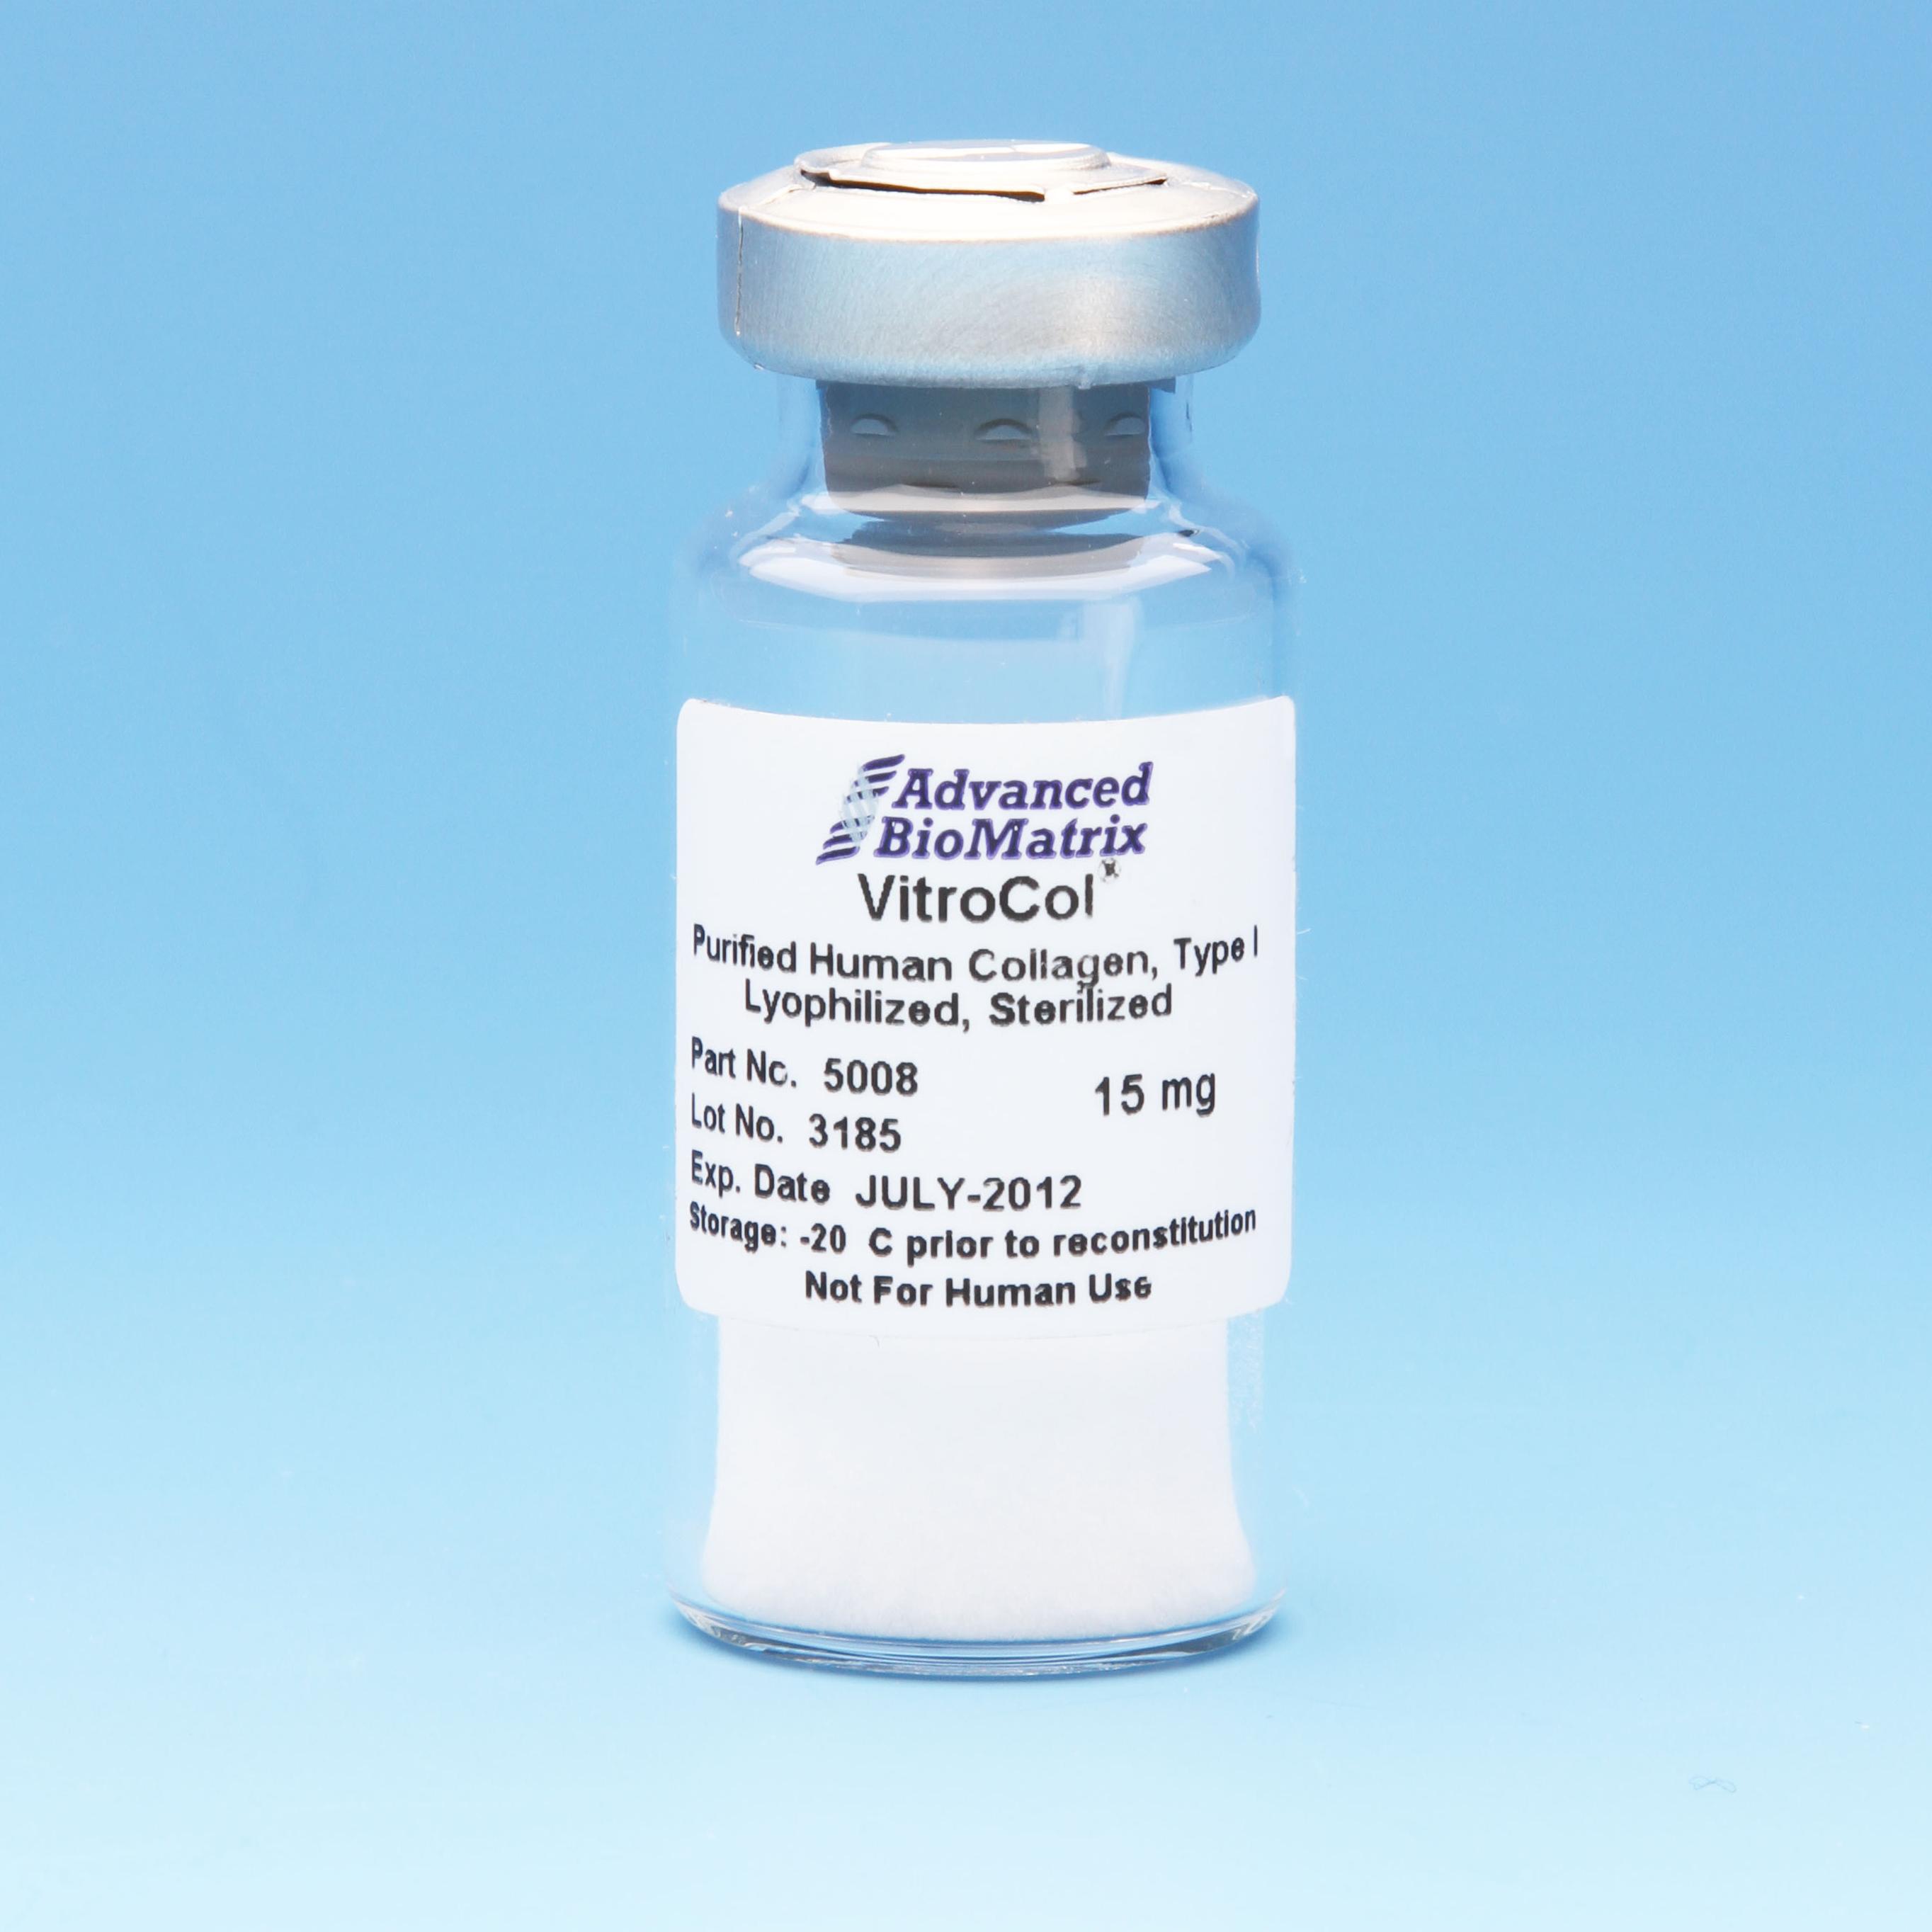 Lyophilized vitrocol type i collagen from advanced biomatrix